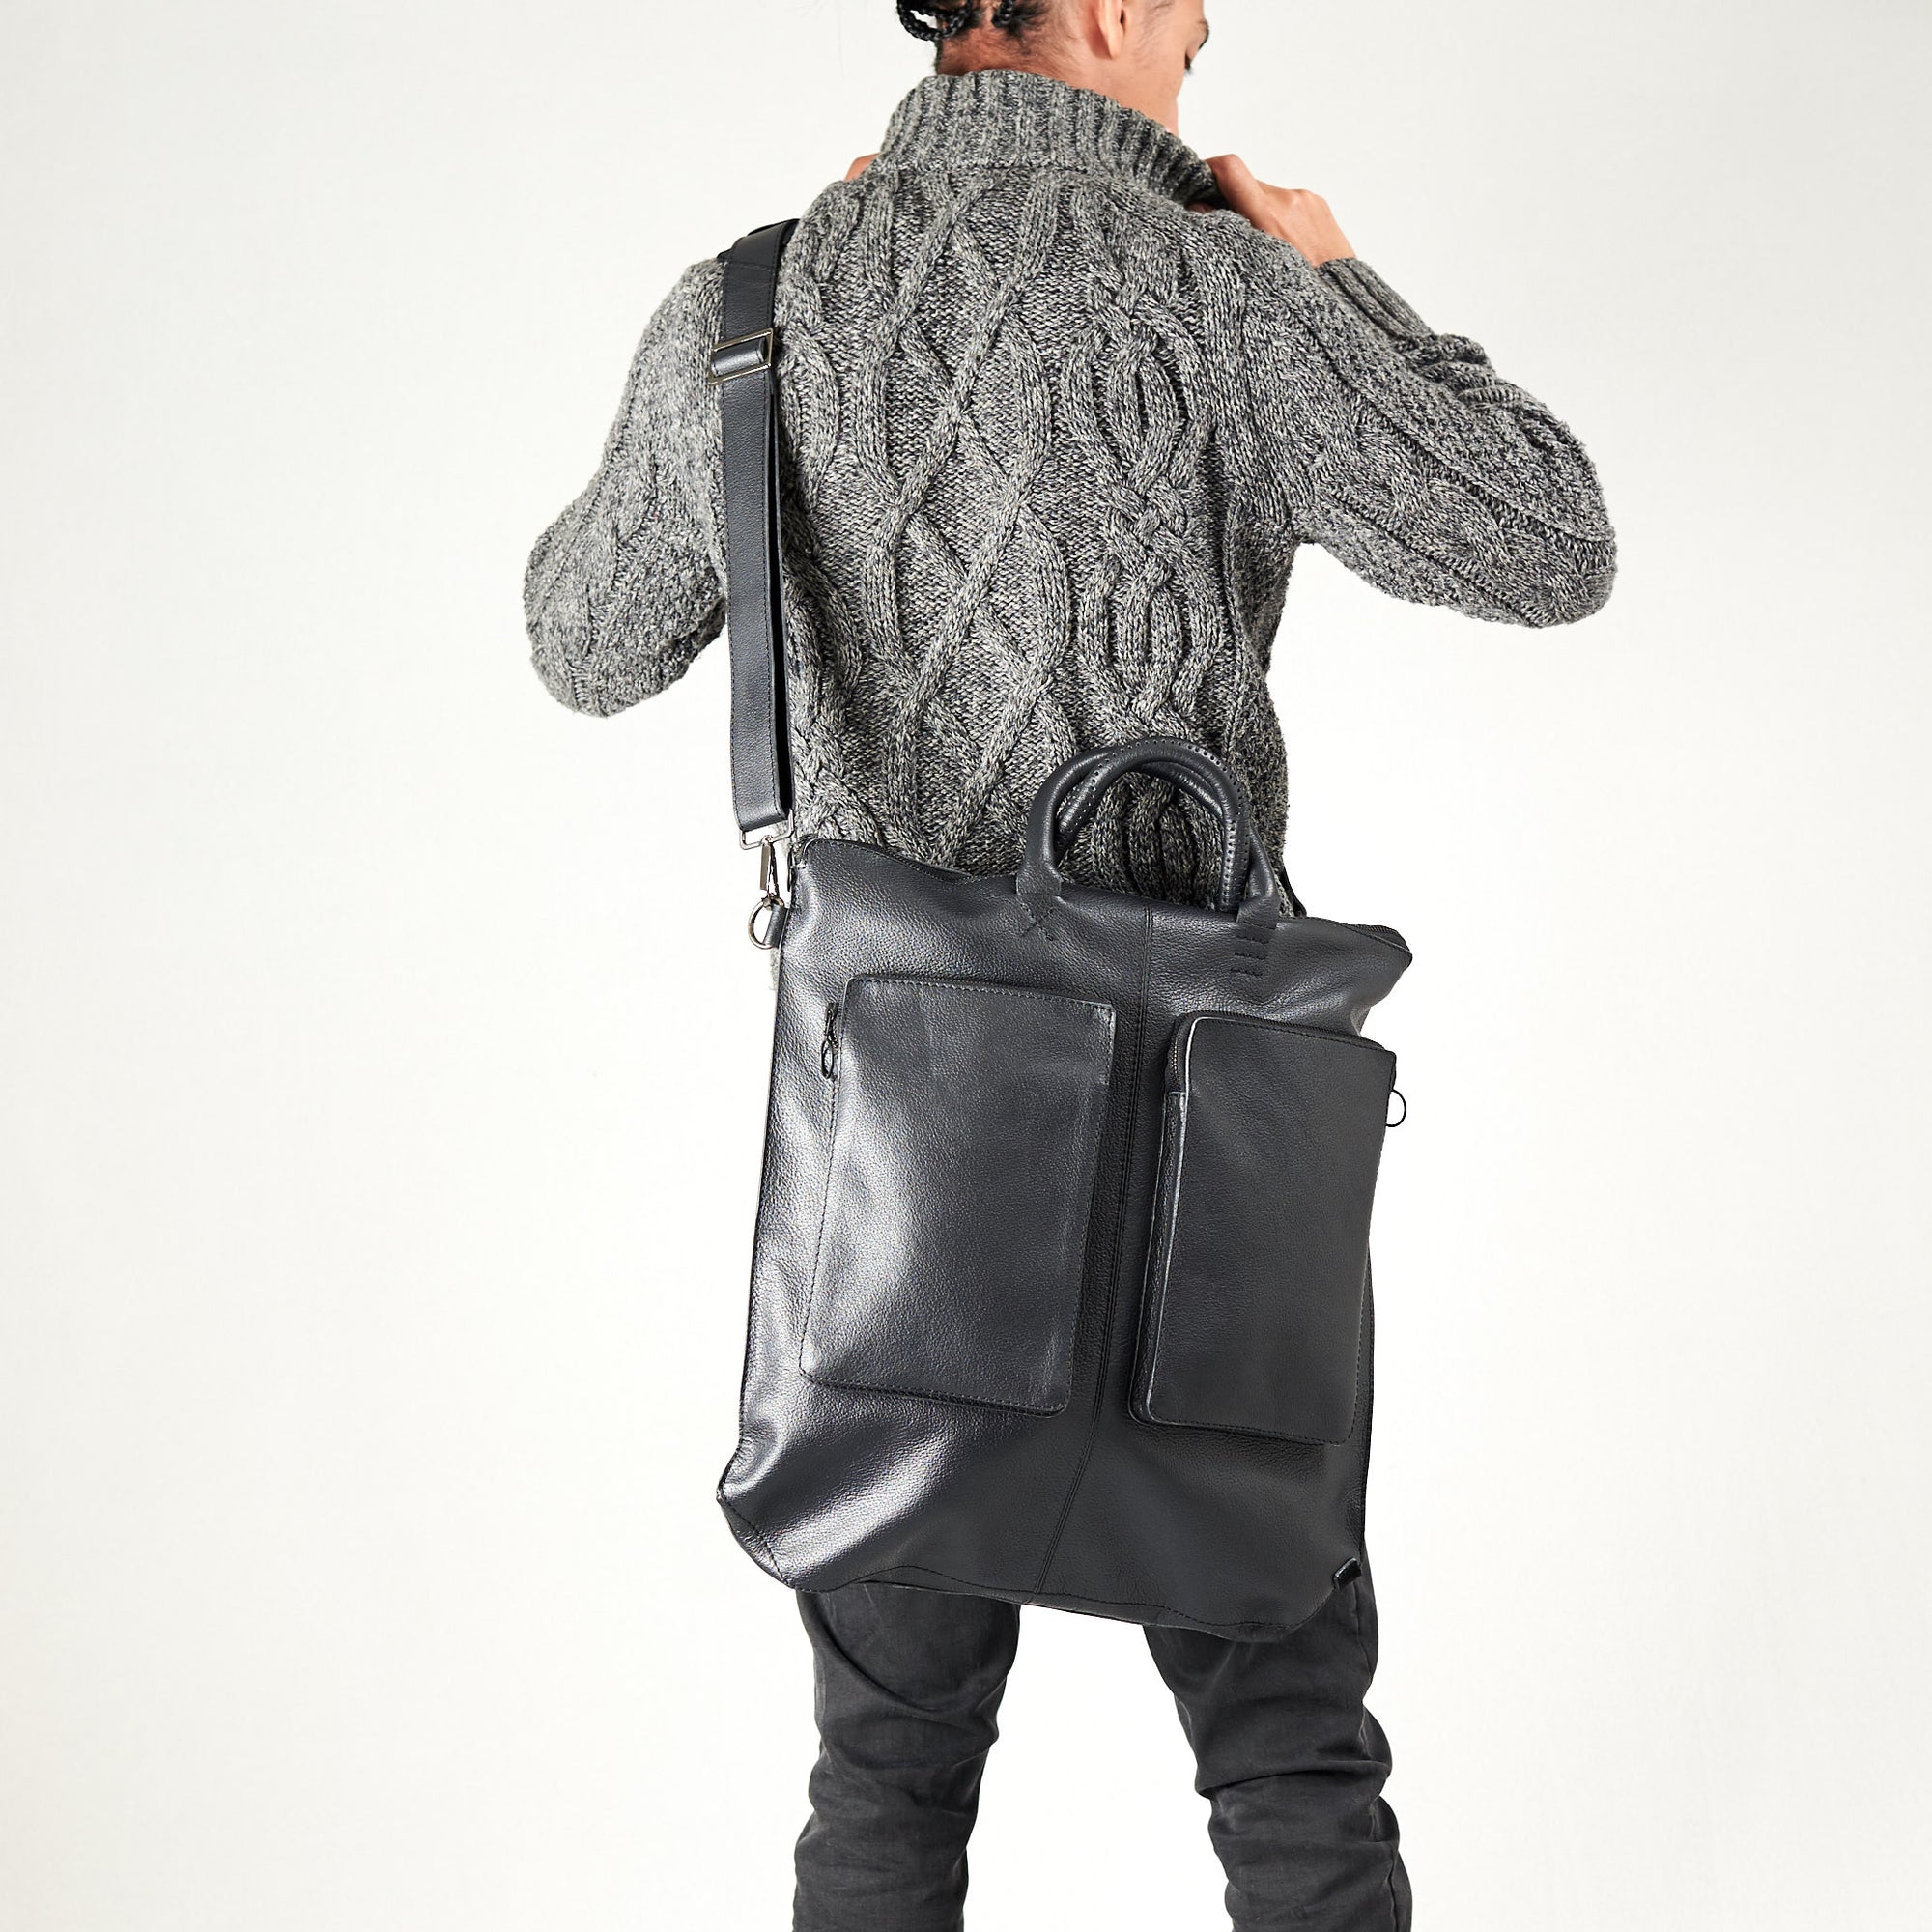 Style shoulder strap use. Black tote zipper bag by Capra Leather. Handmade men work bag.